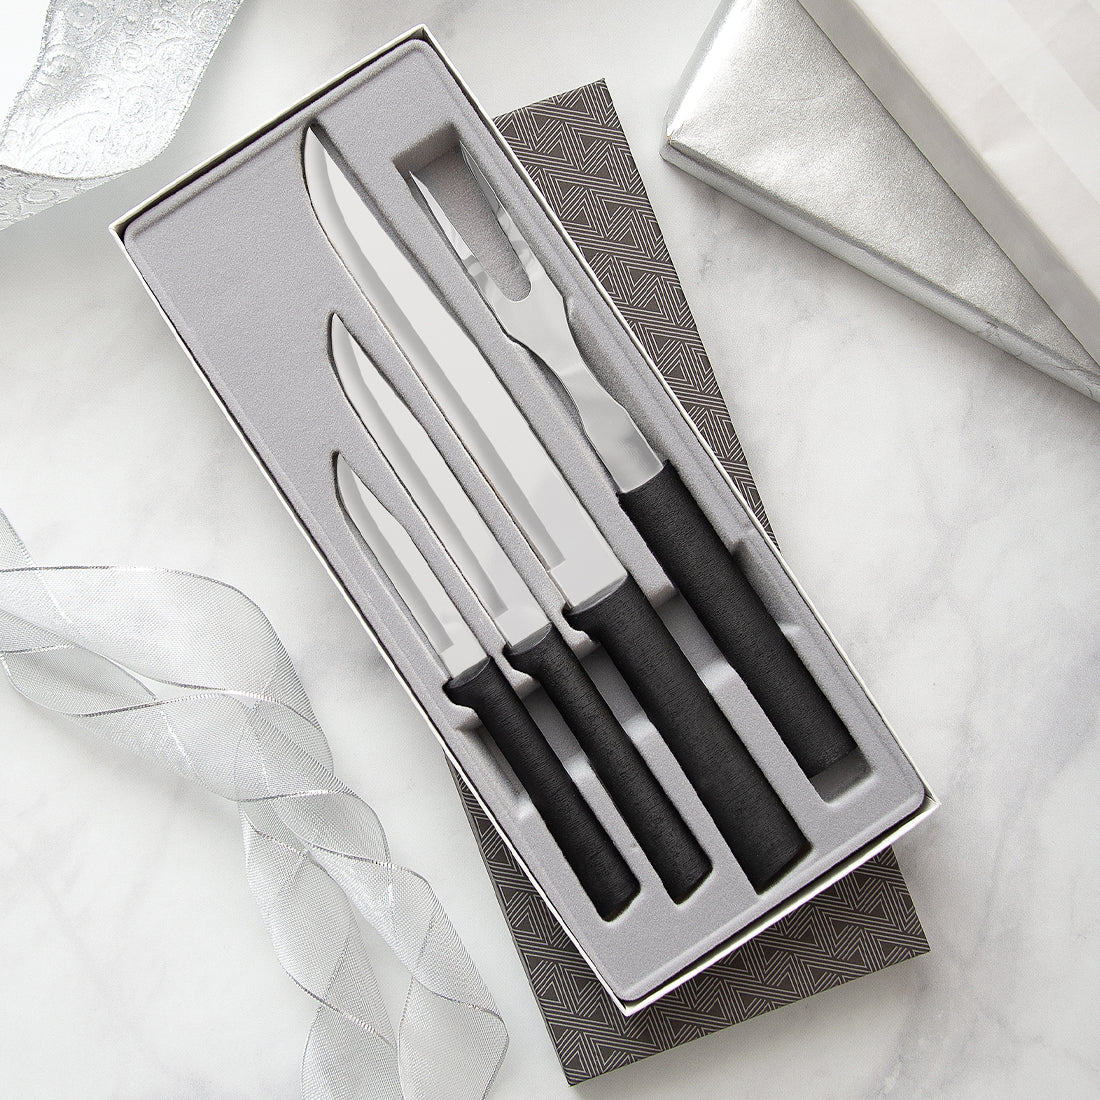 Wedding Register Gift Set  Stainless Steel Knife Set - Rada Cutlery